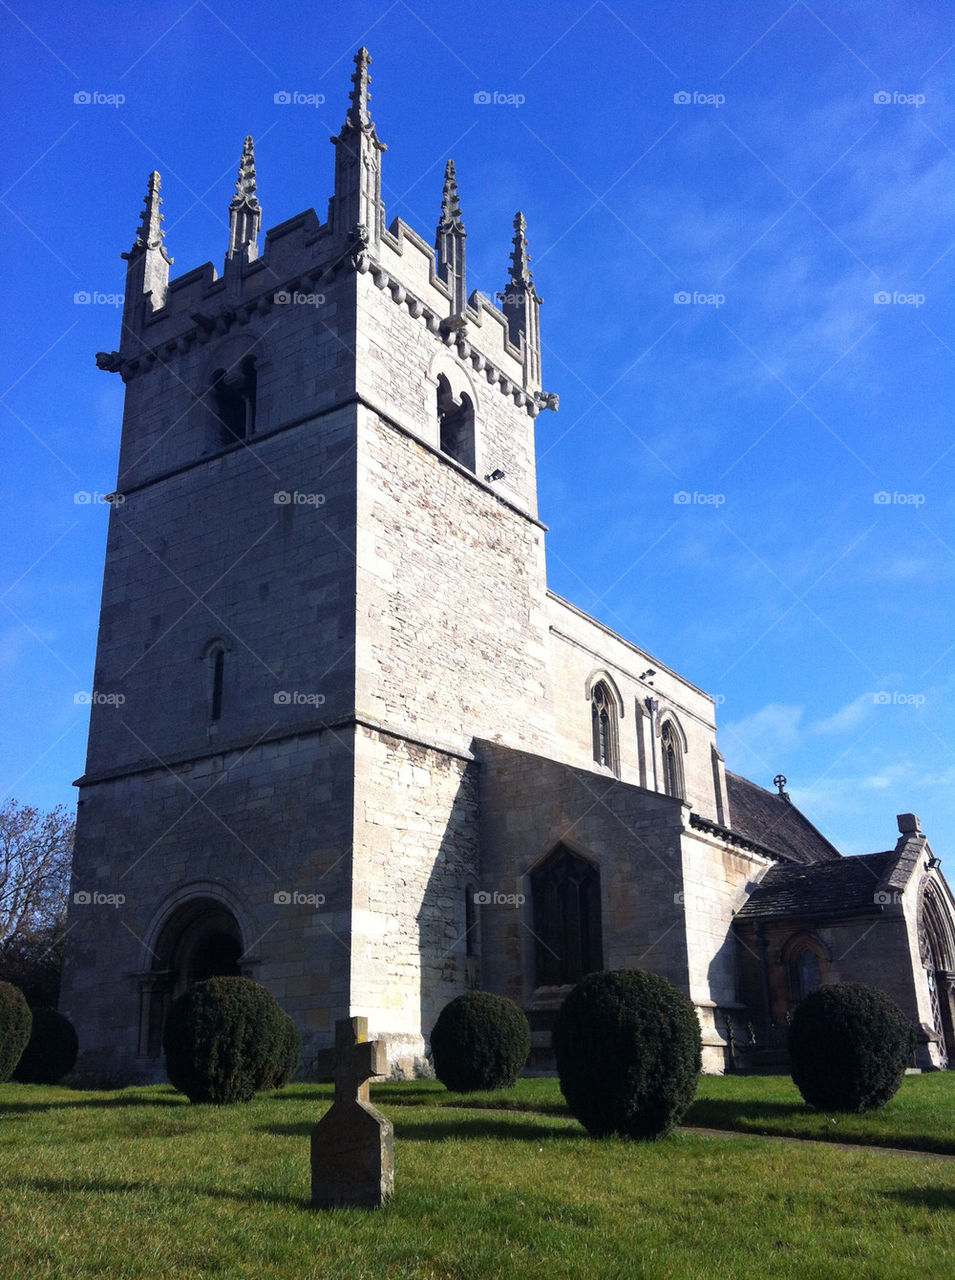 sunny england church architecture by technotimber